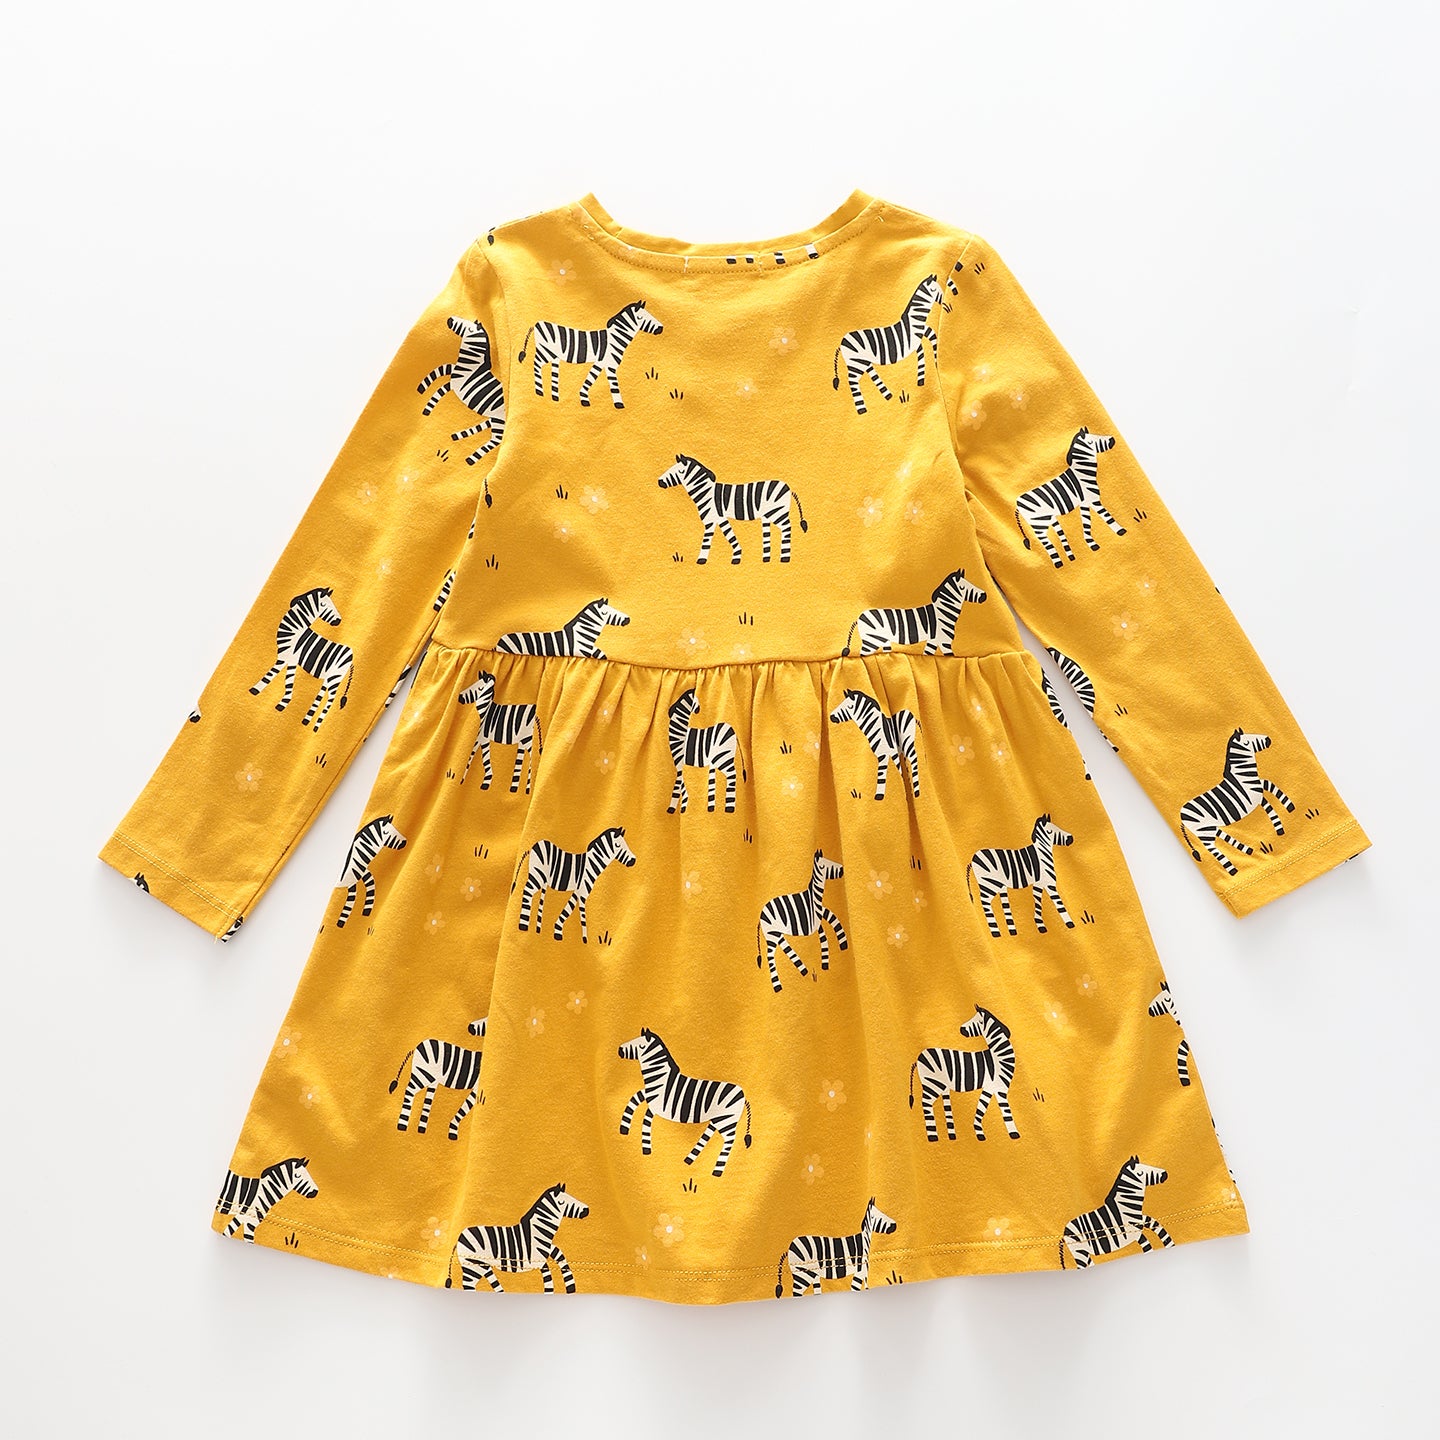 Junior Girls' Zebra Print Dress